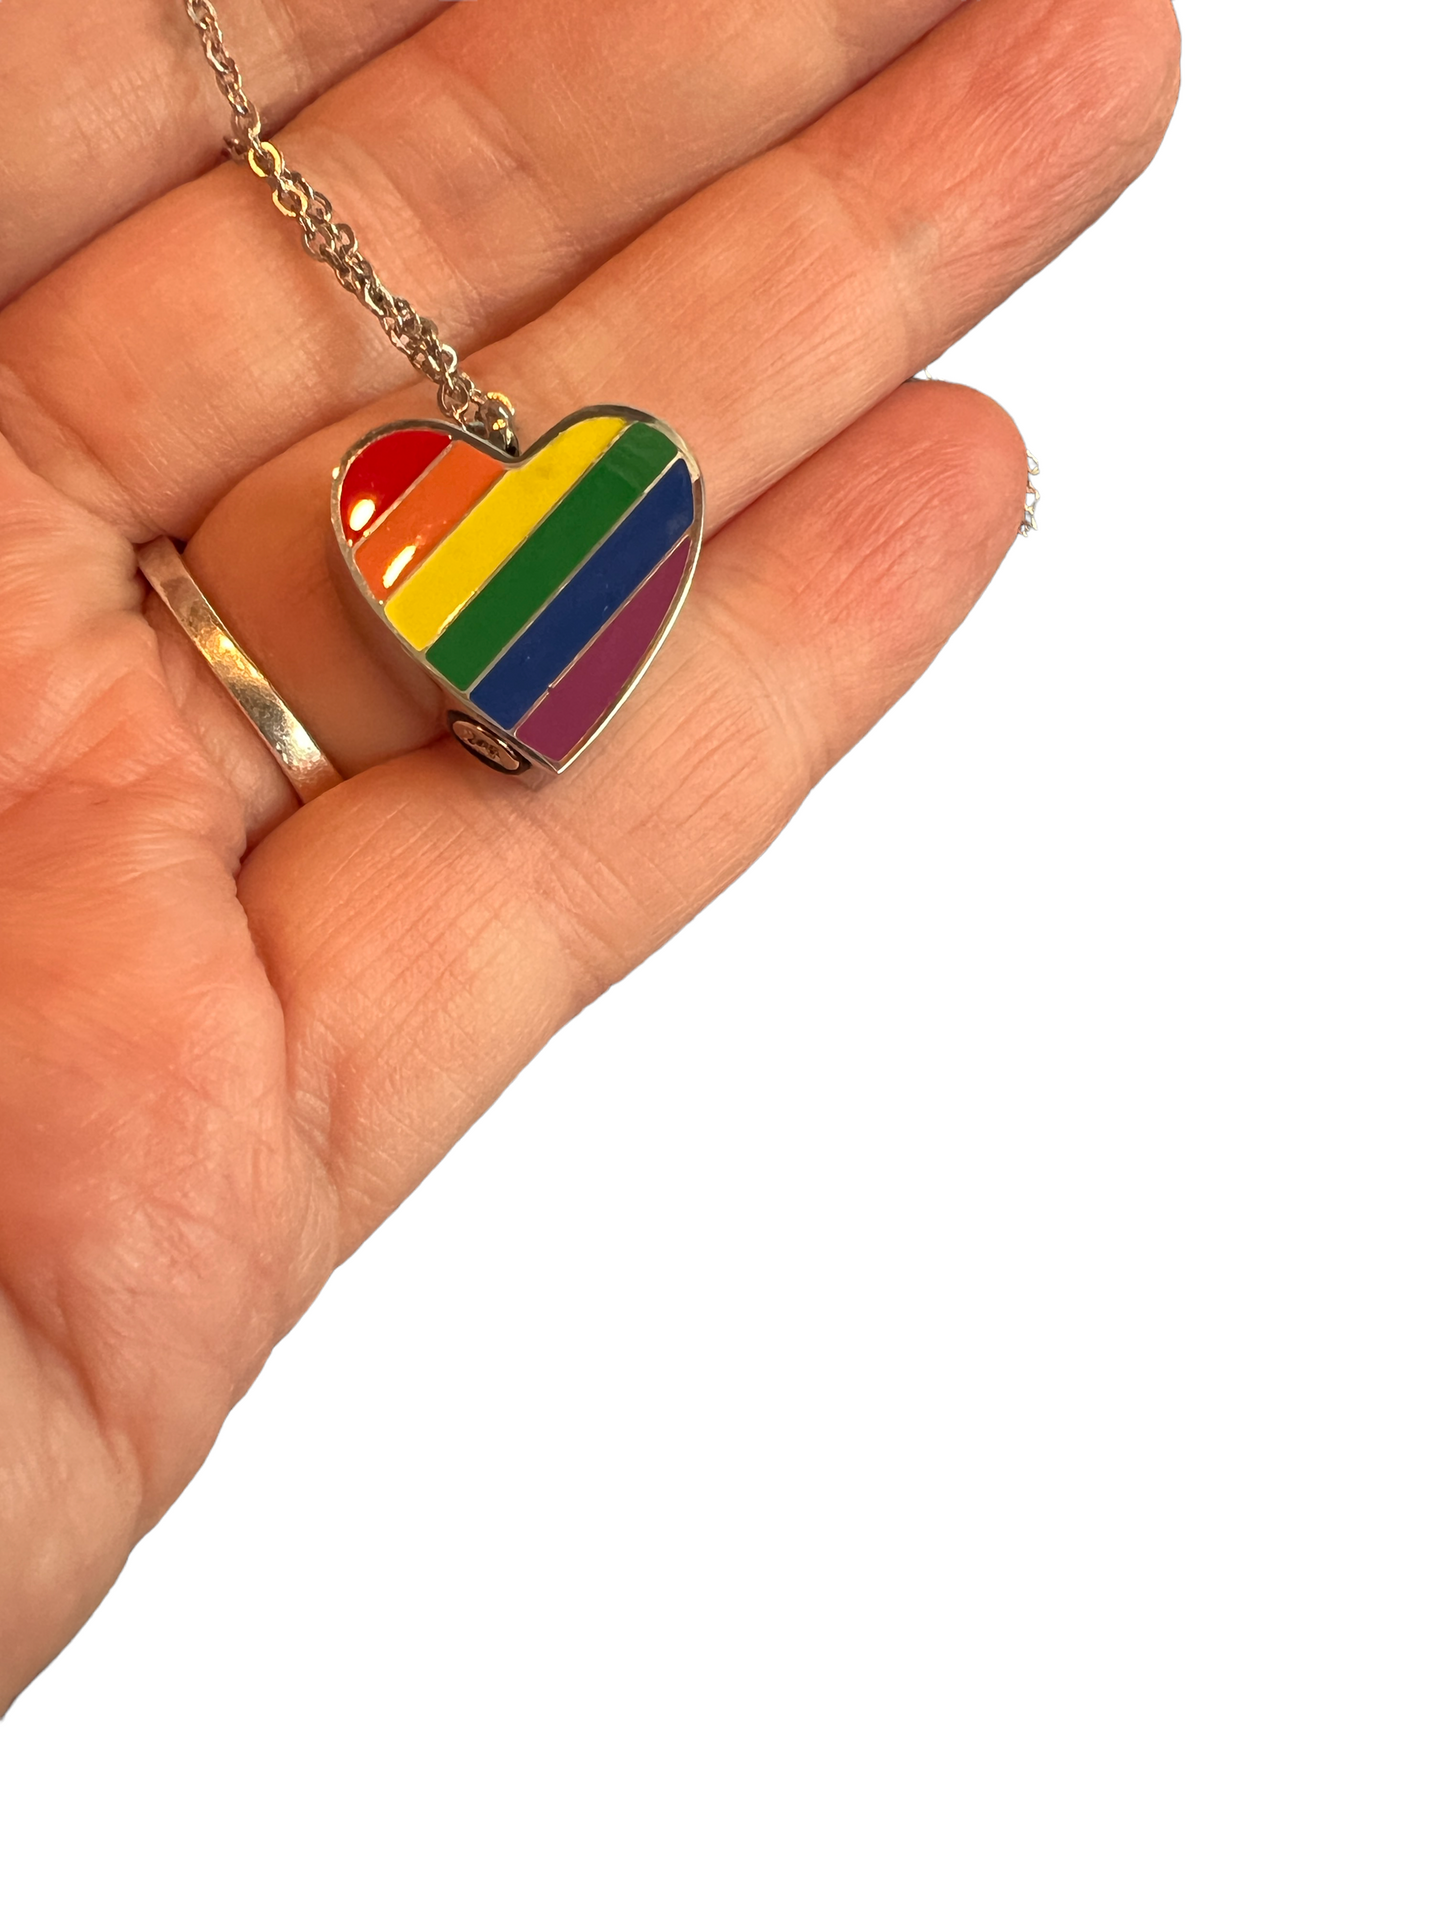 LGBTQ Rainbow Heart Urn Necklace